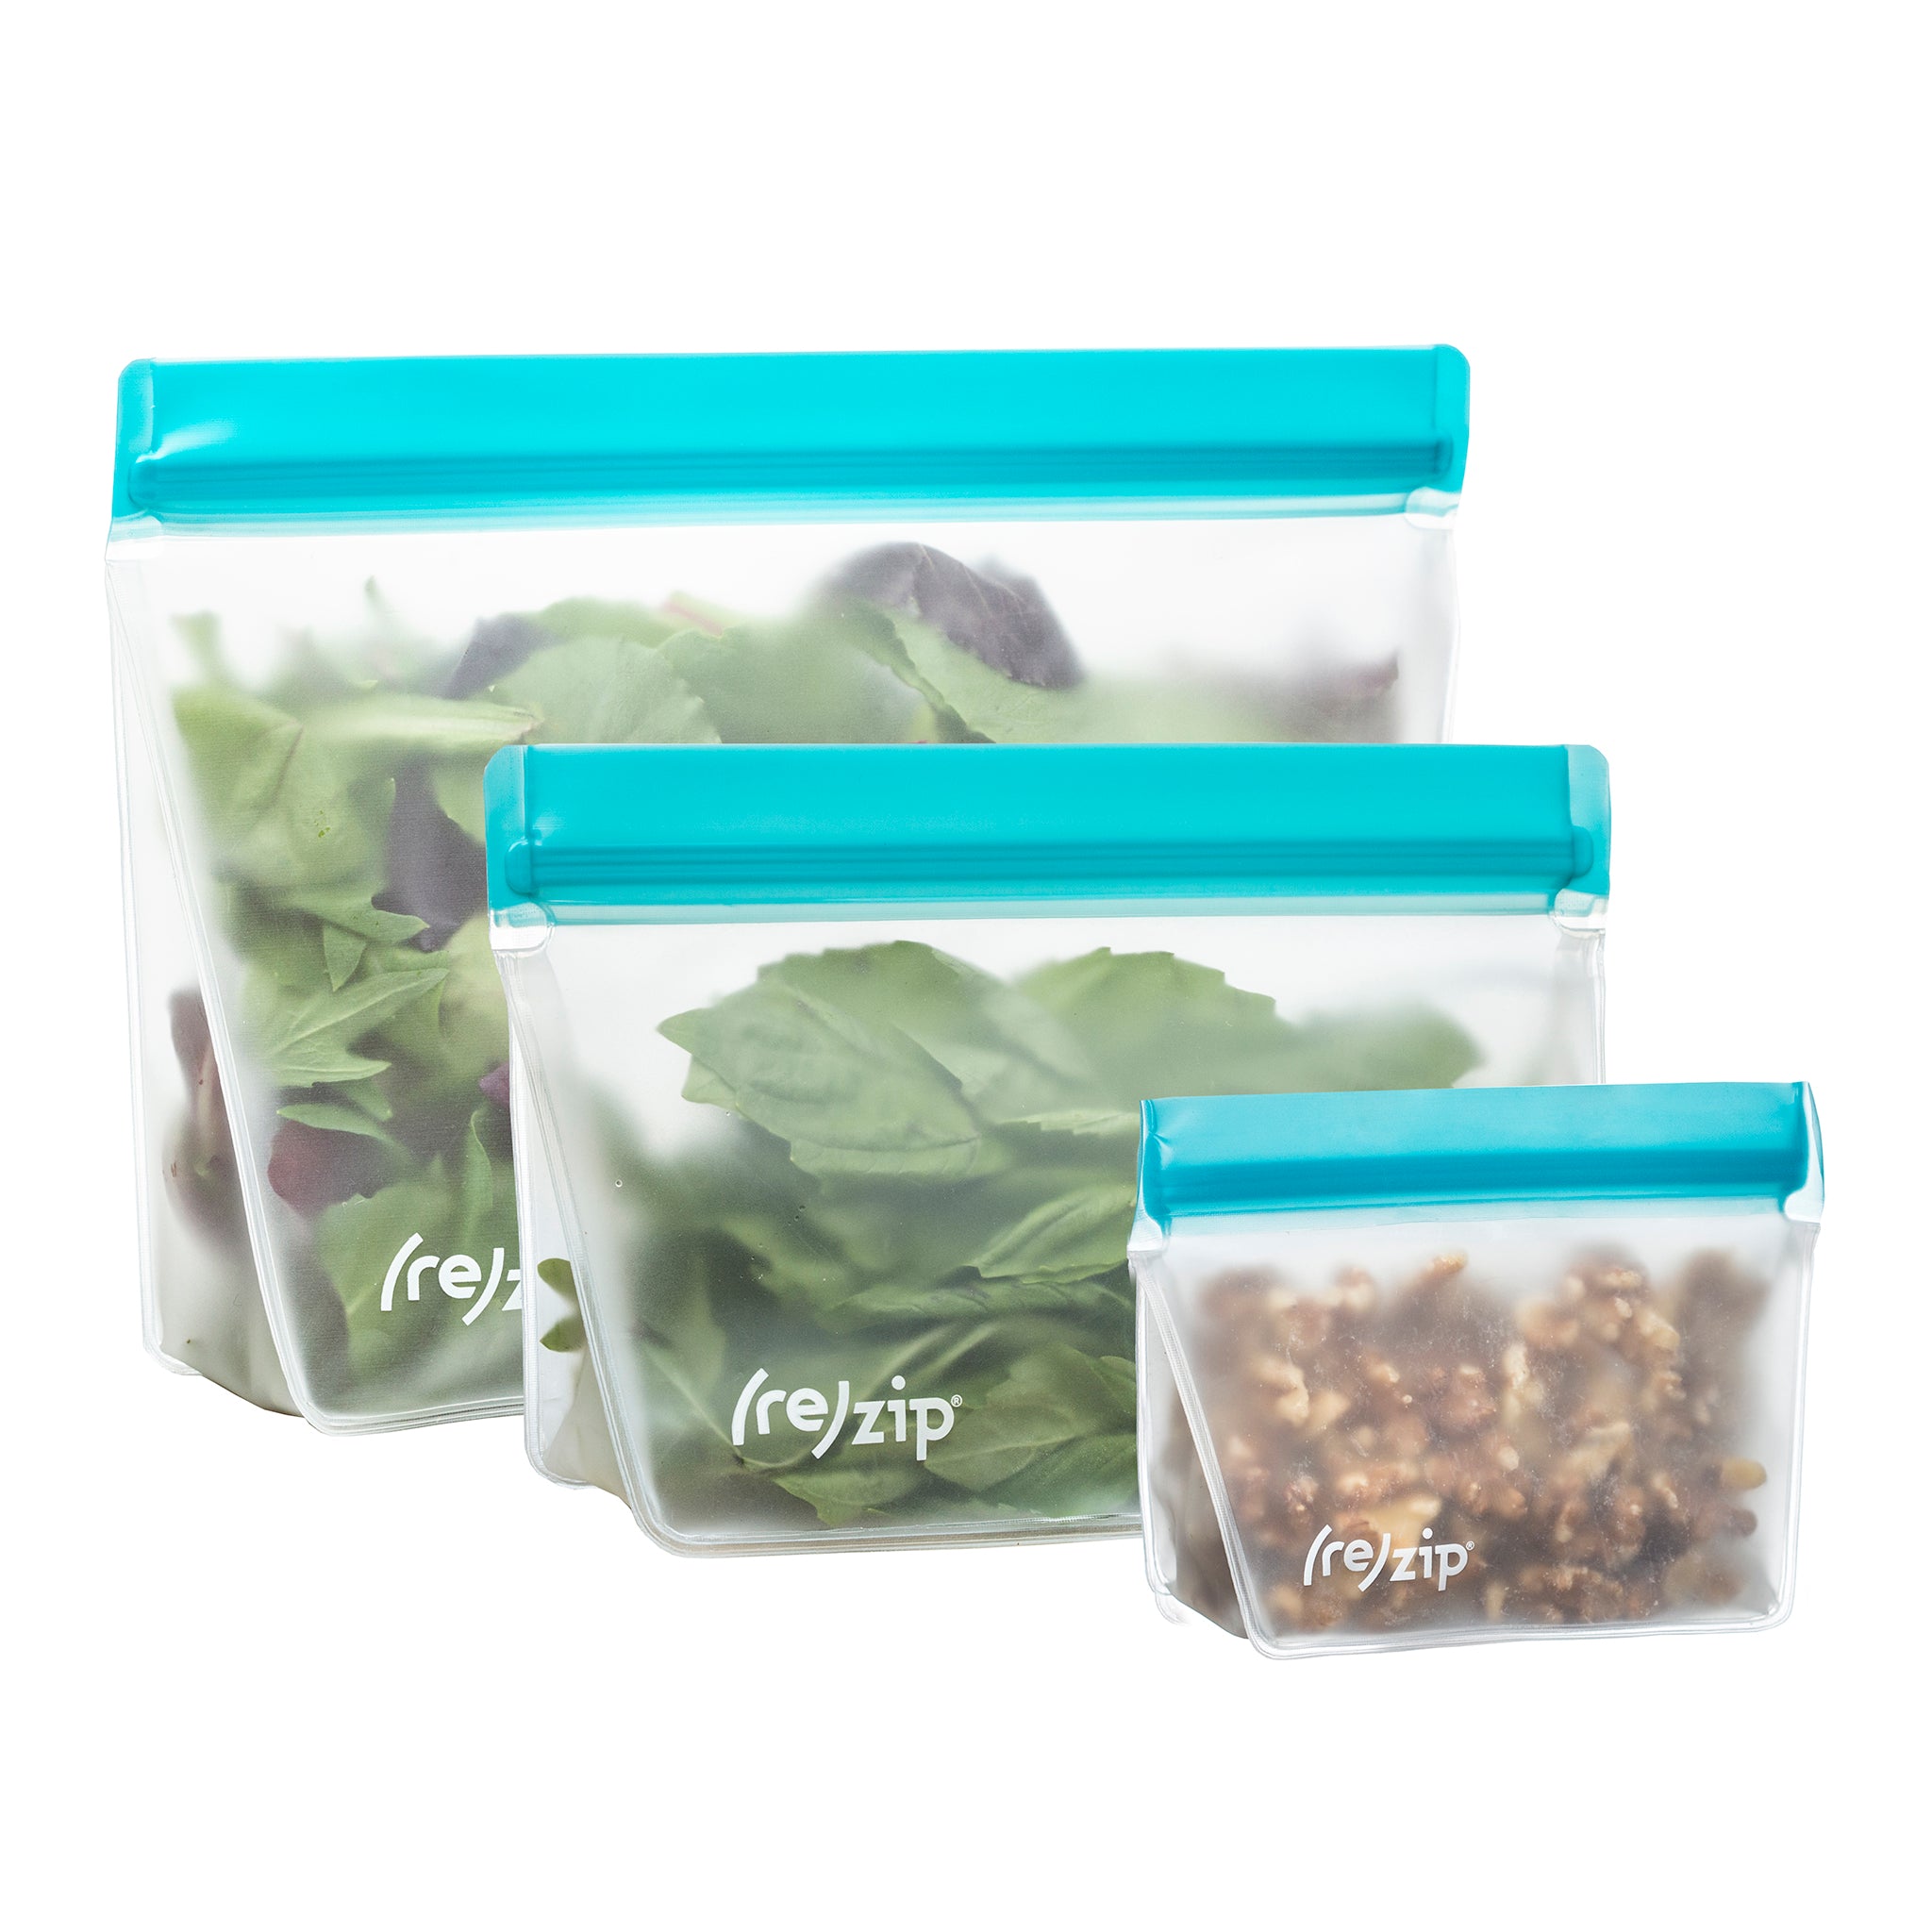 Reusable Double Zipper Bags, Food Storage Bags, Leak-proof Freezer